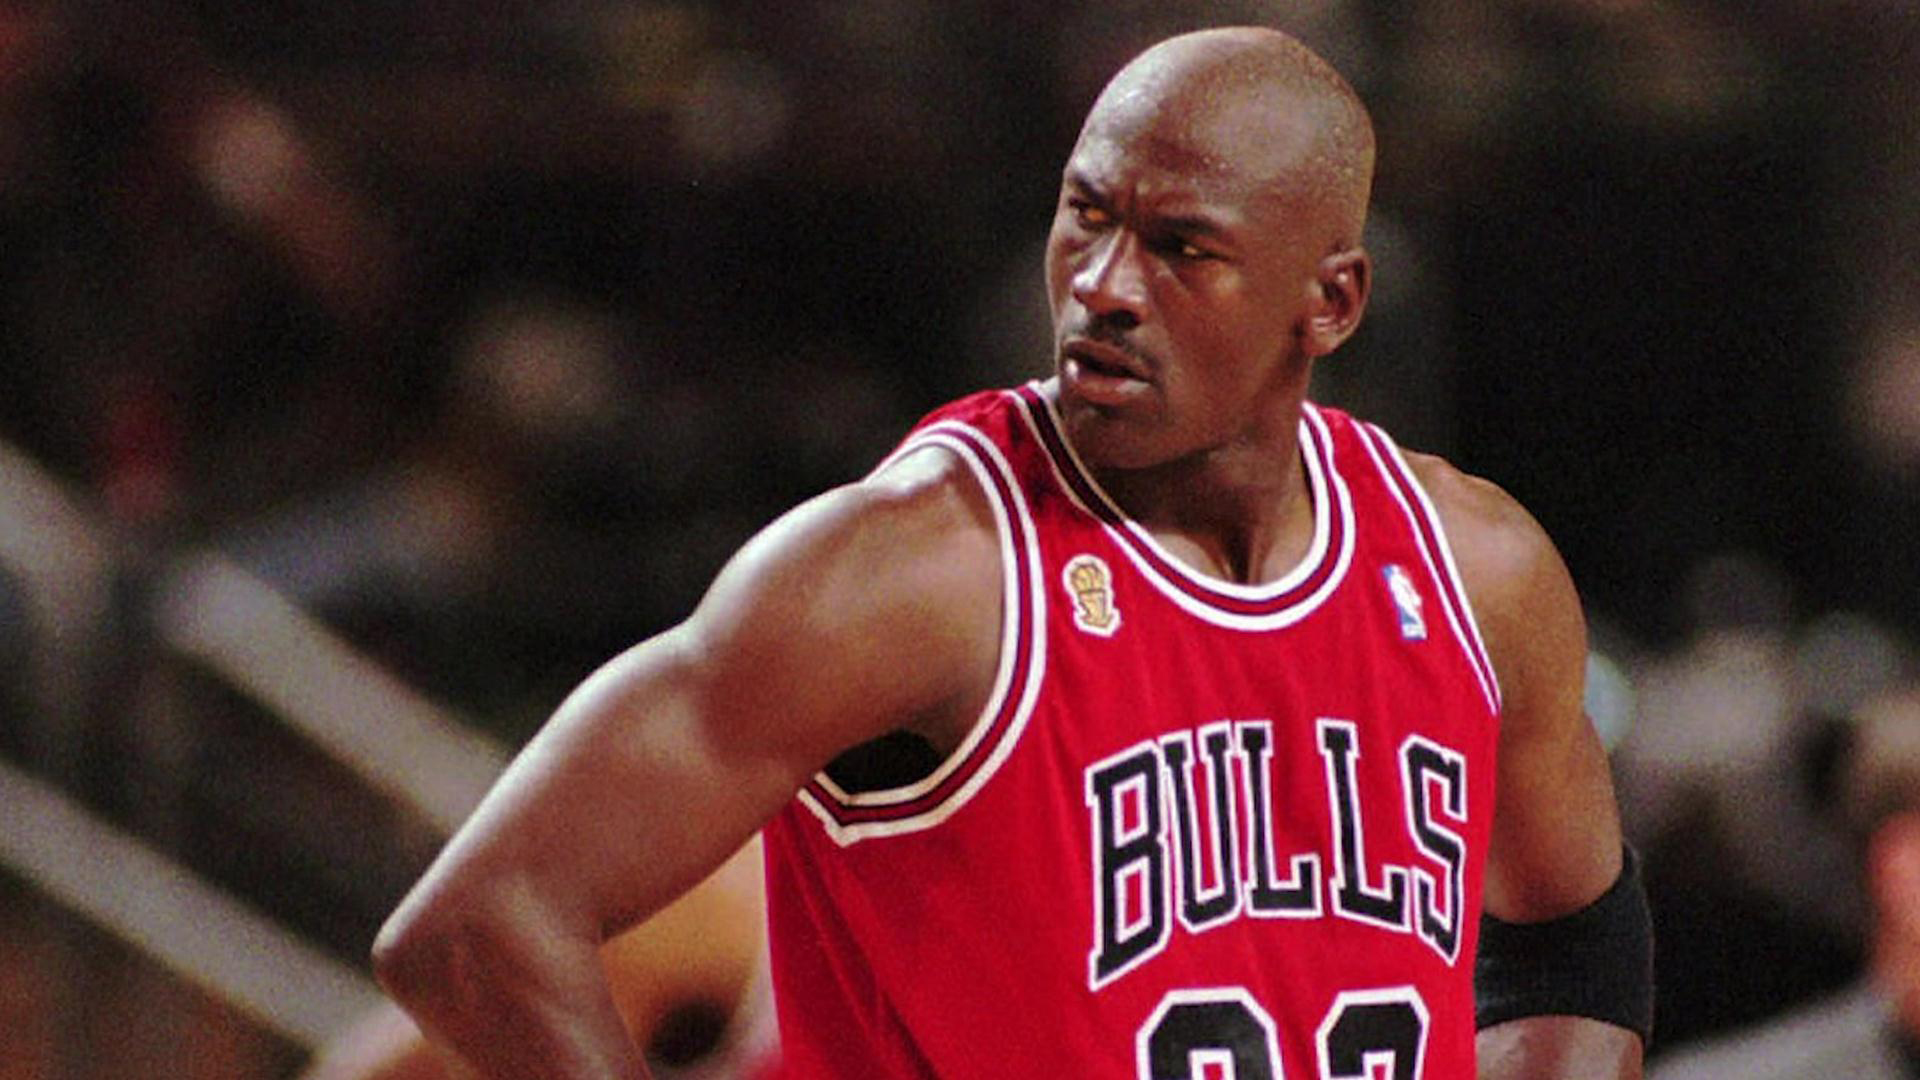 The dark side of NBA legend Michael Jordan